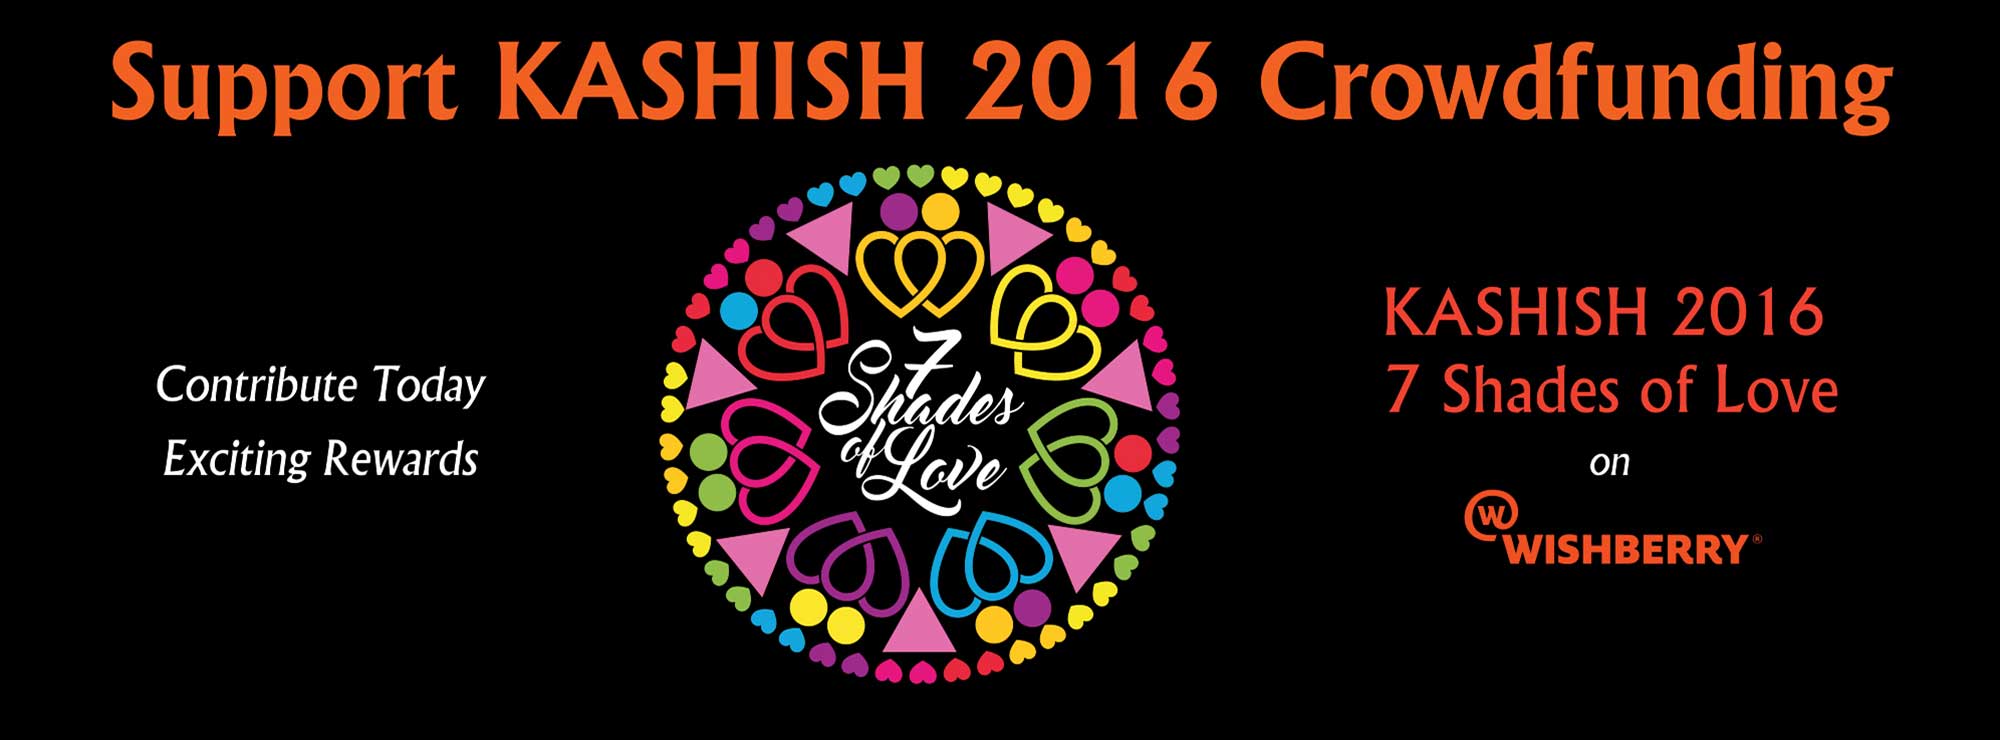 Kashish has raised funds via Wishberry